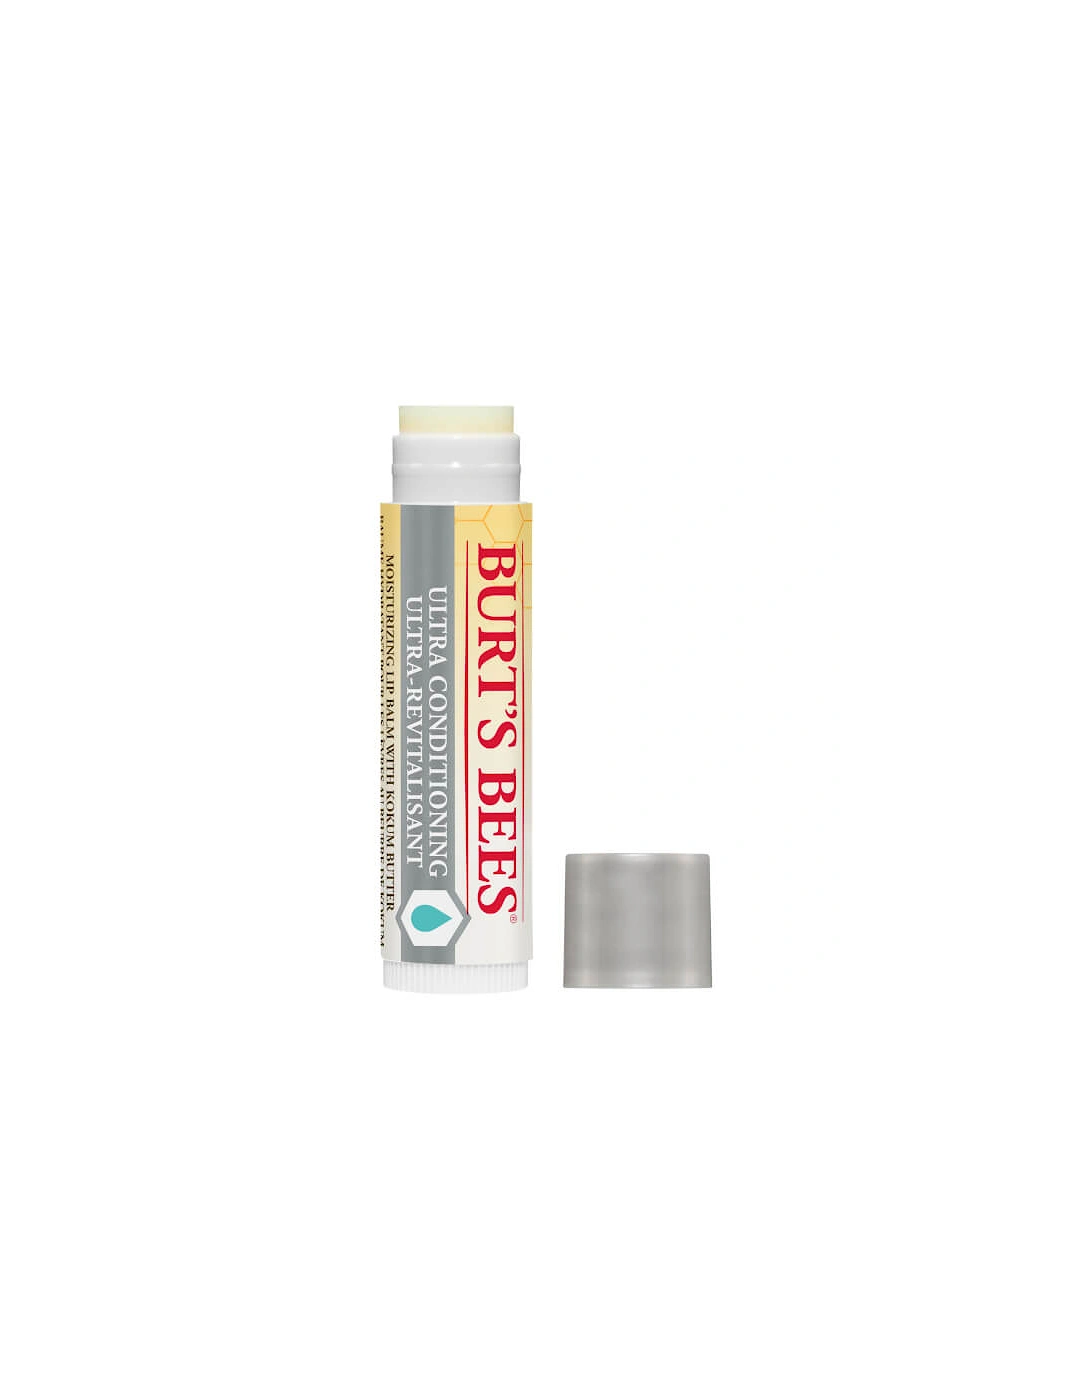 Lip Balm - Ultra Conditioning 4.25g - Burt's Bees, 2 of 1